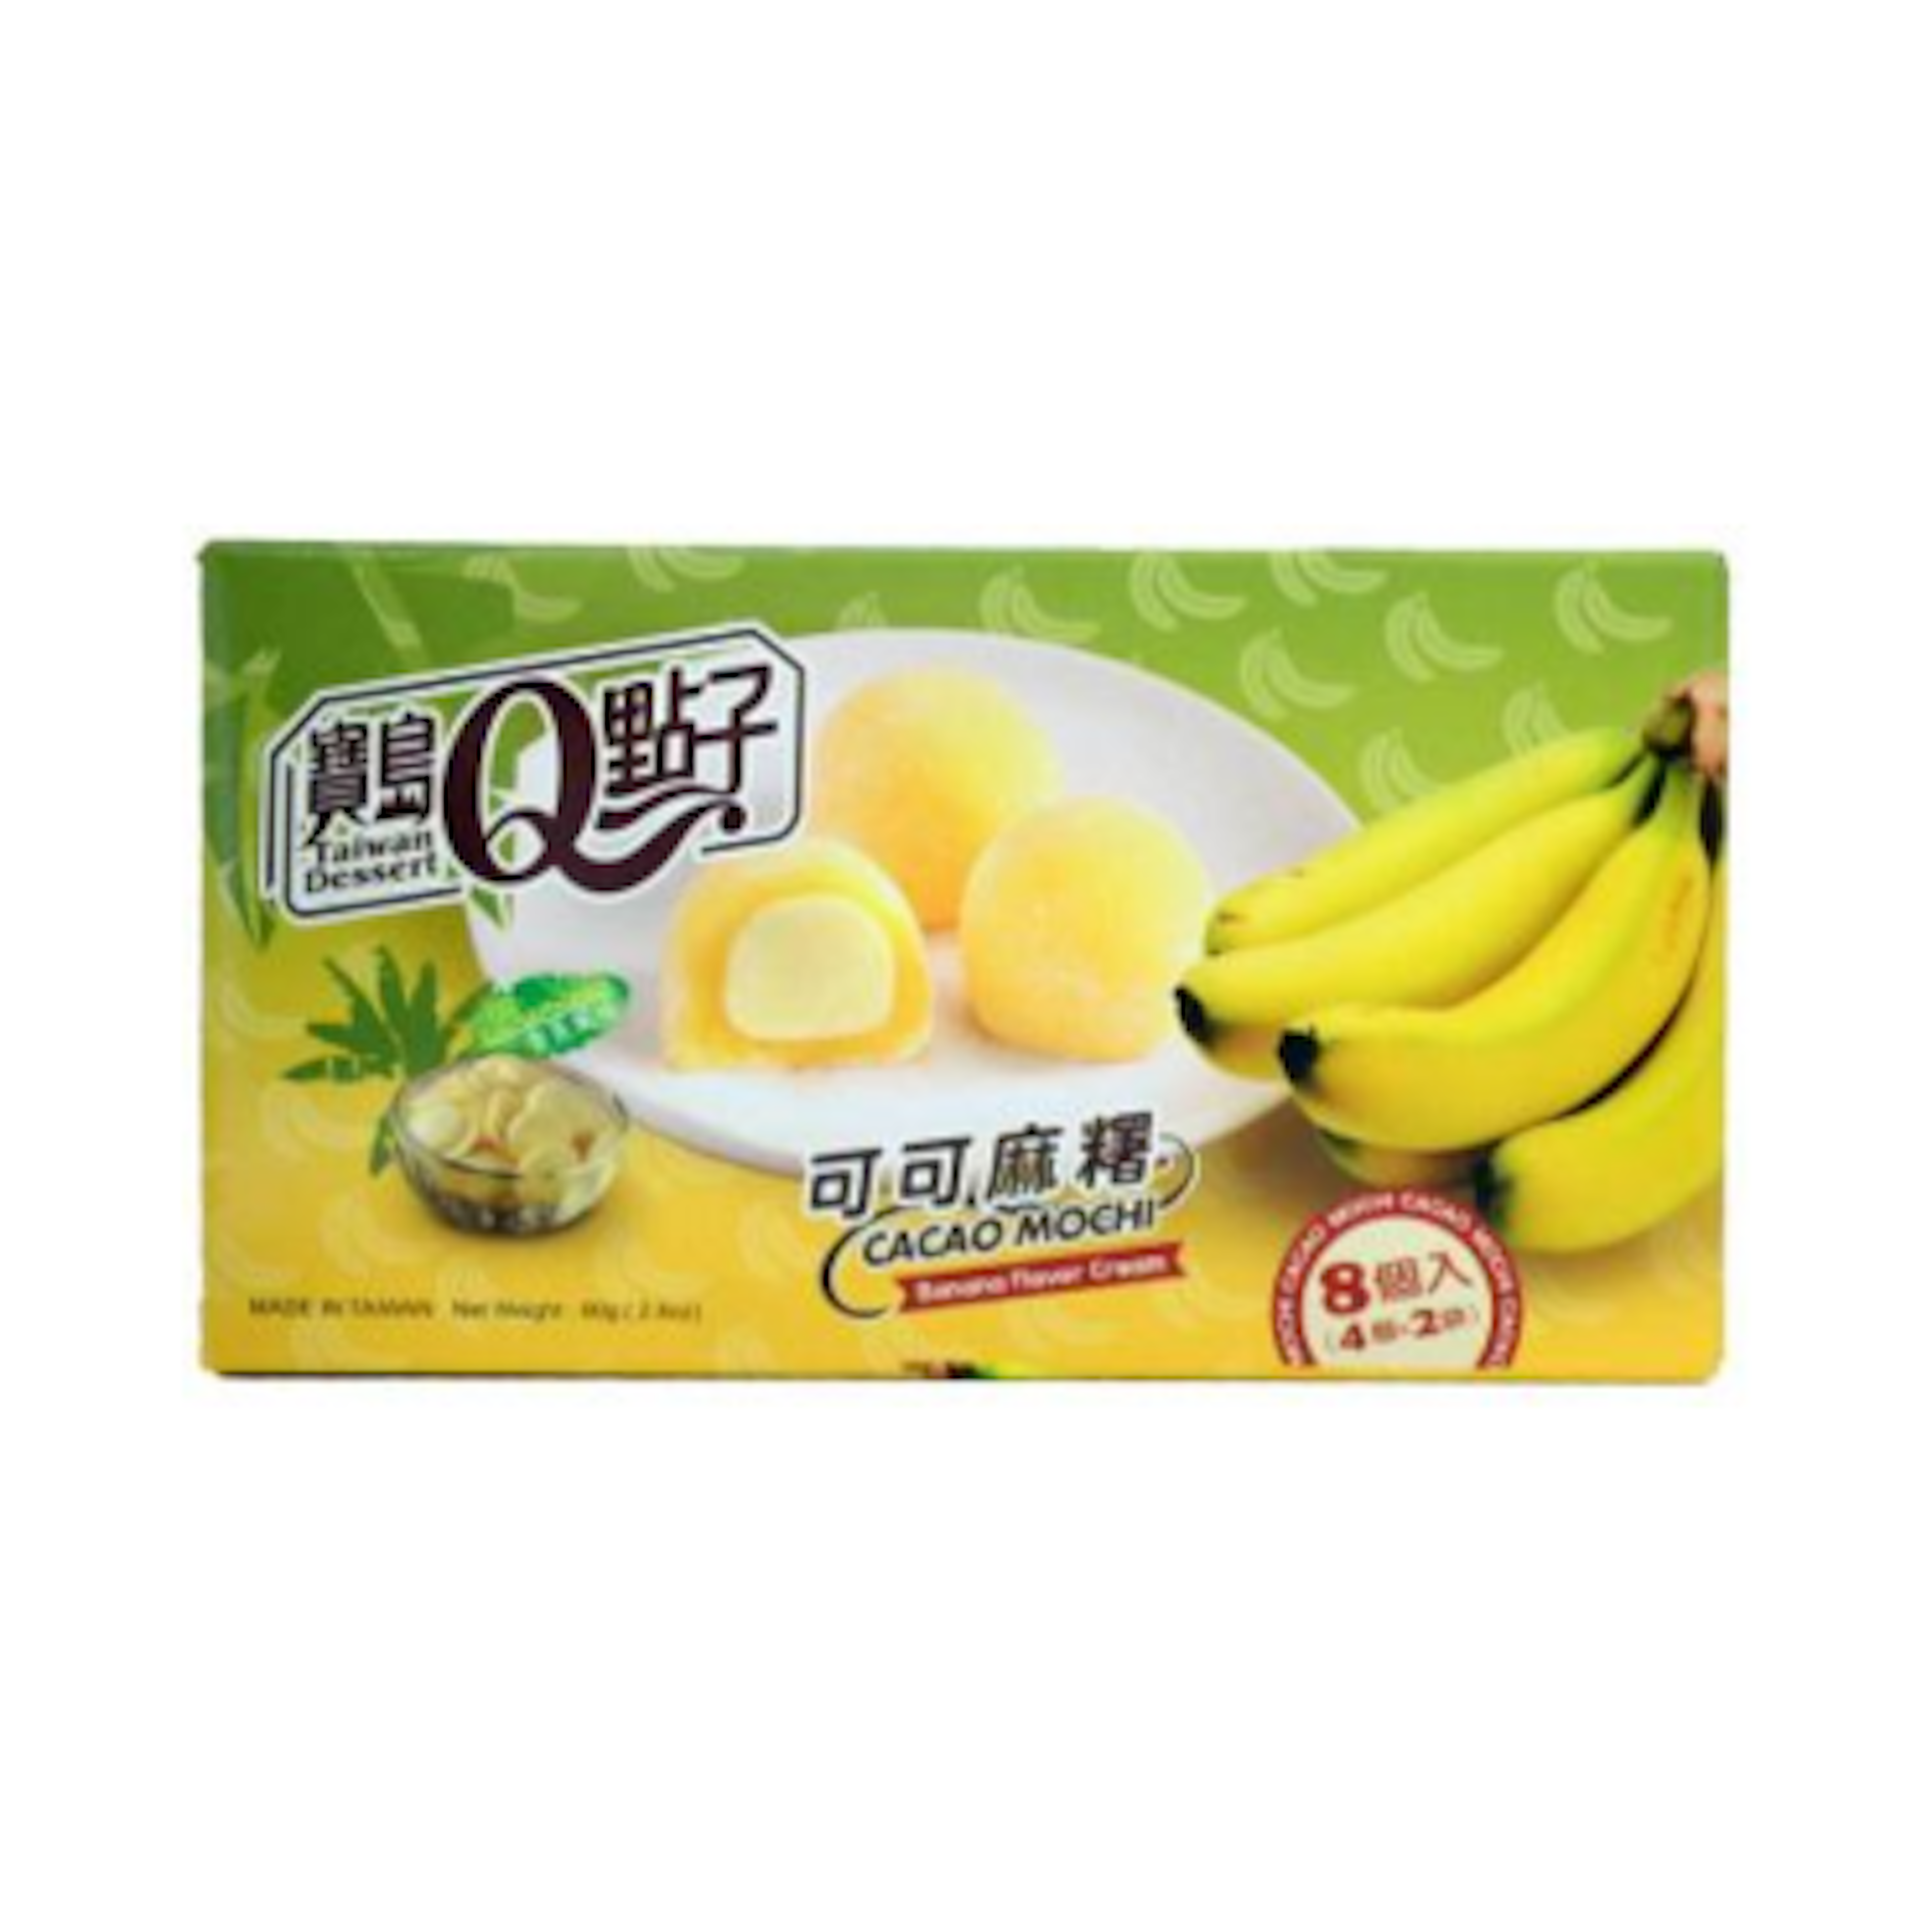 TW Q Mico Mochi Banana - Zarte Bananen-Mochi, 8er Pack, 80g